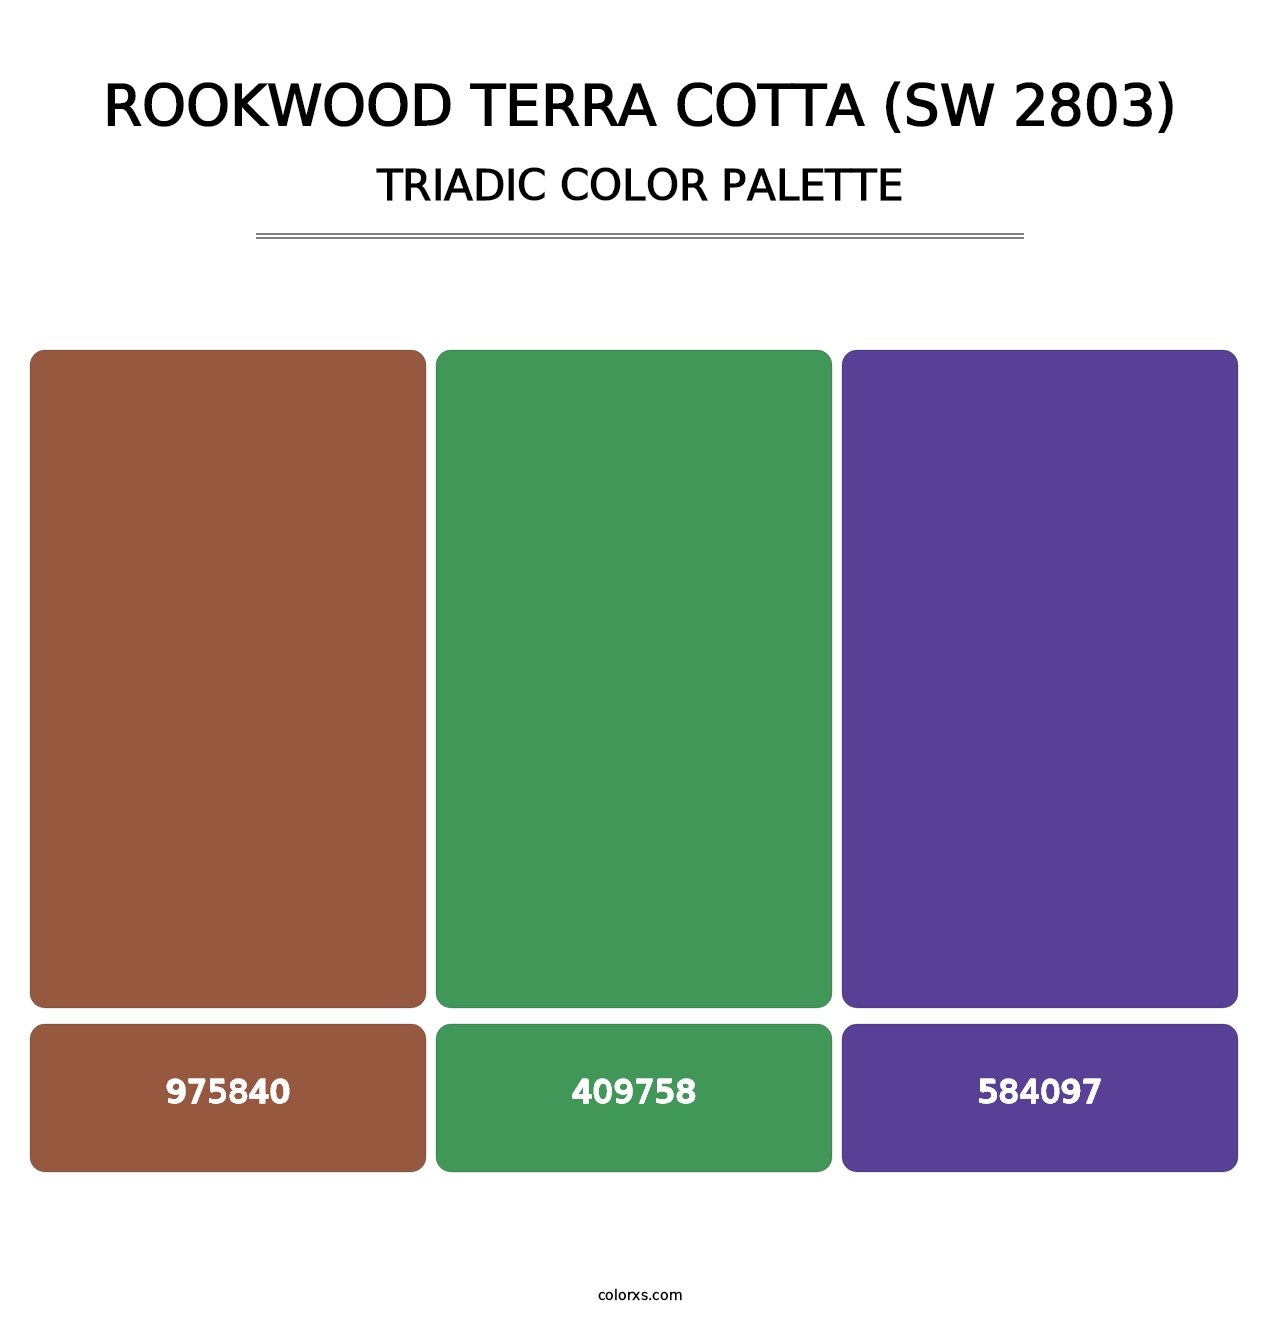 Rookwood Terra Cotta (SW 2803) - Triadic Color Palette